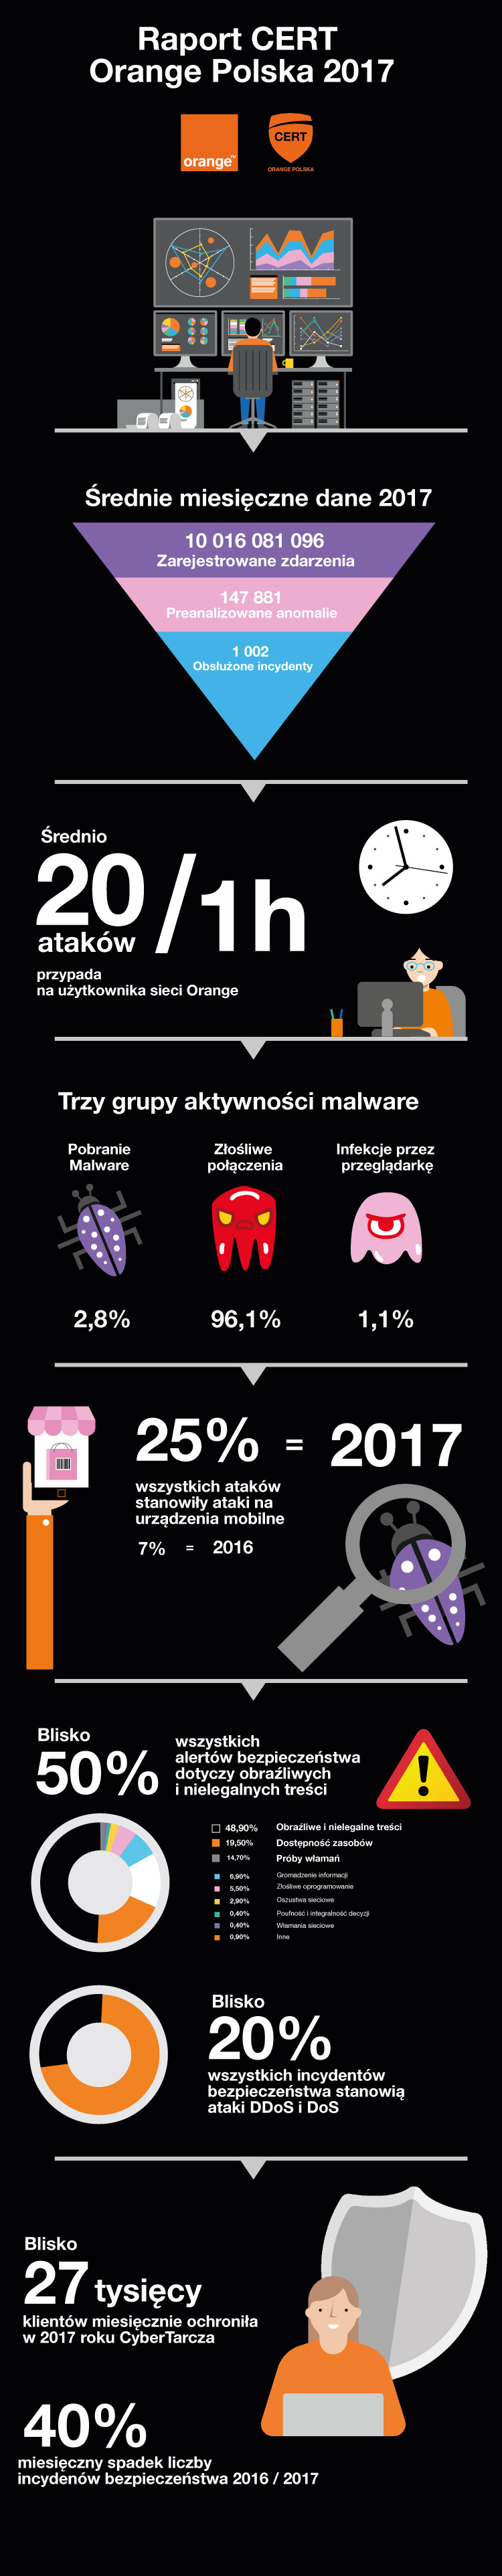 infografika-podsumowujaca-raport-cert-orange-polska-2017.jpg